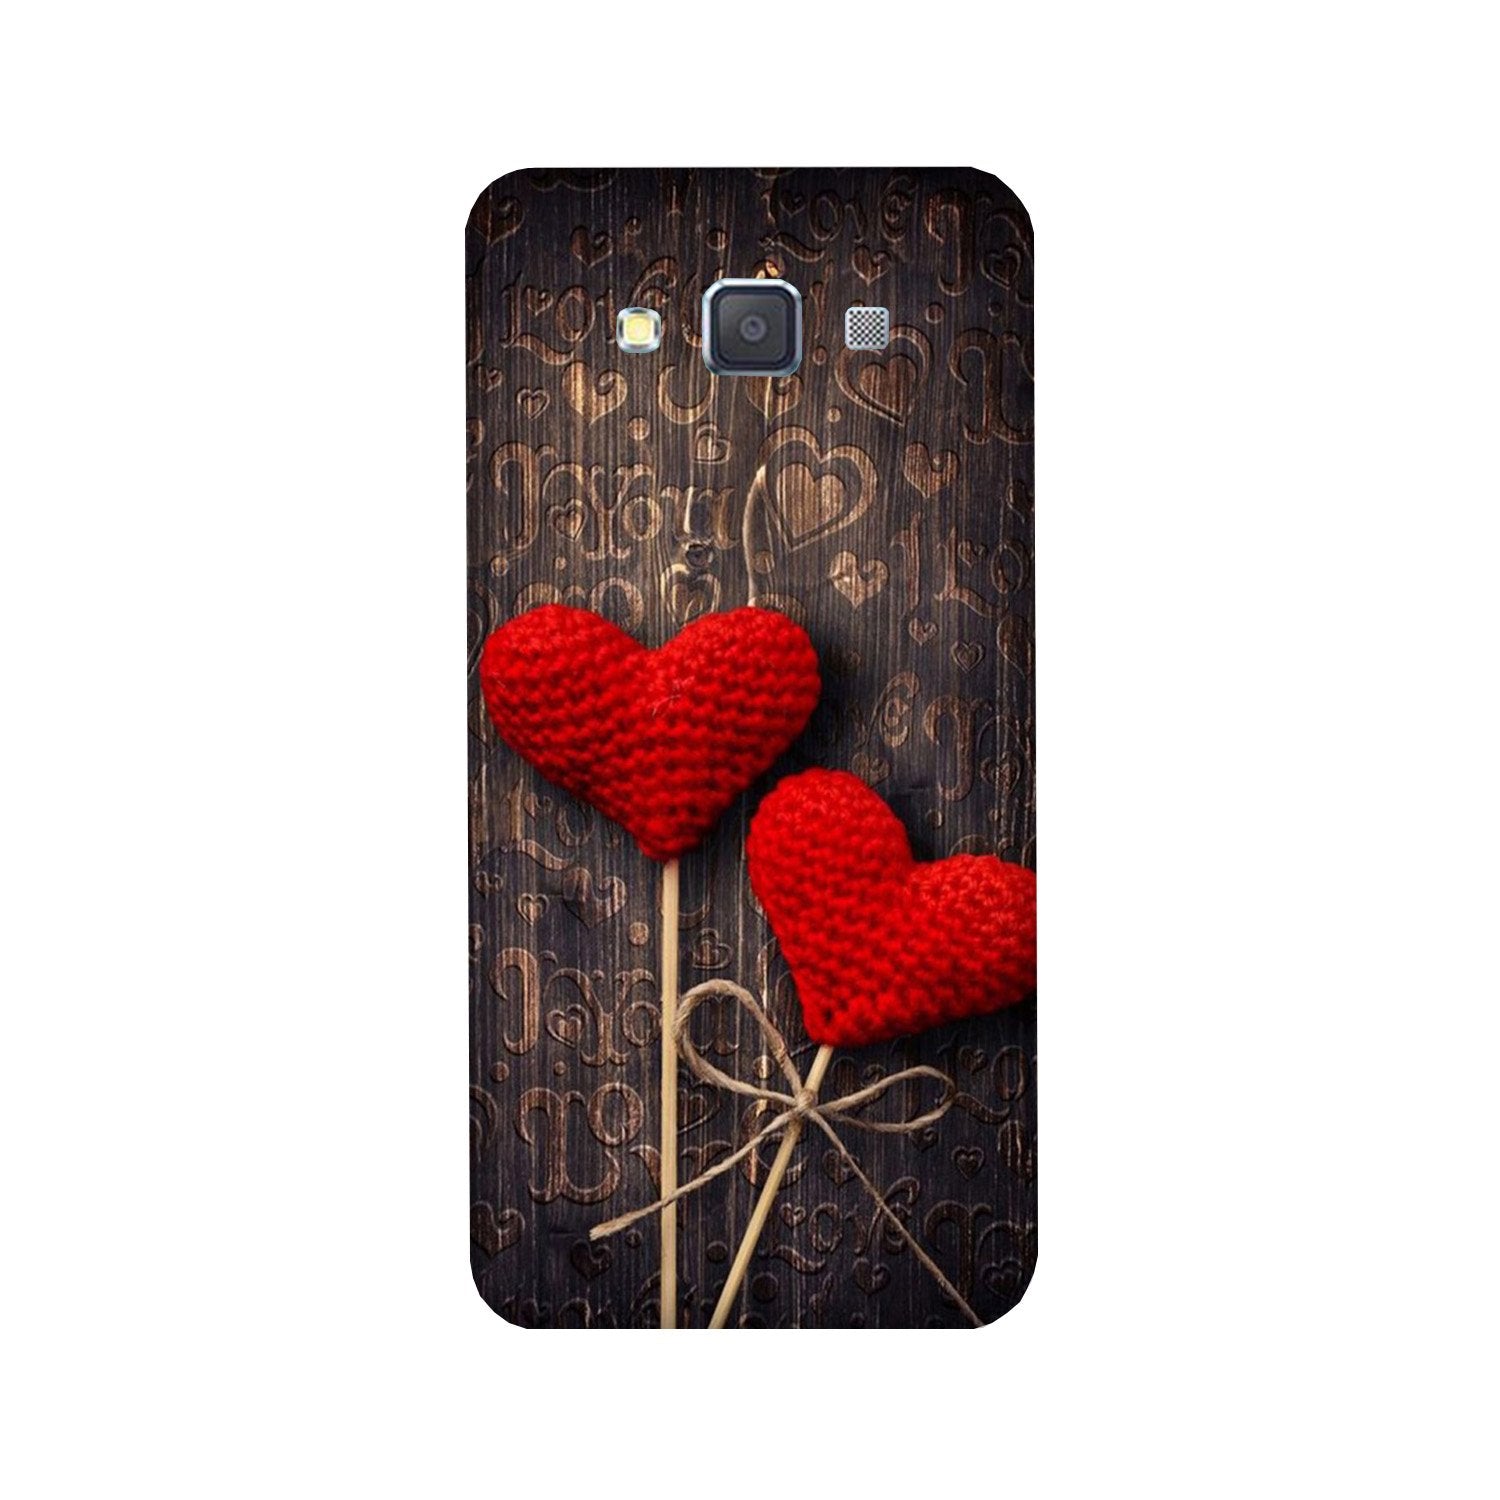 Red Hearts Case for Galaxy E7